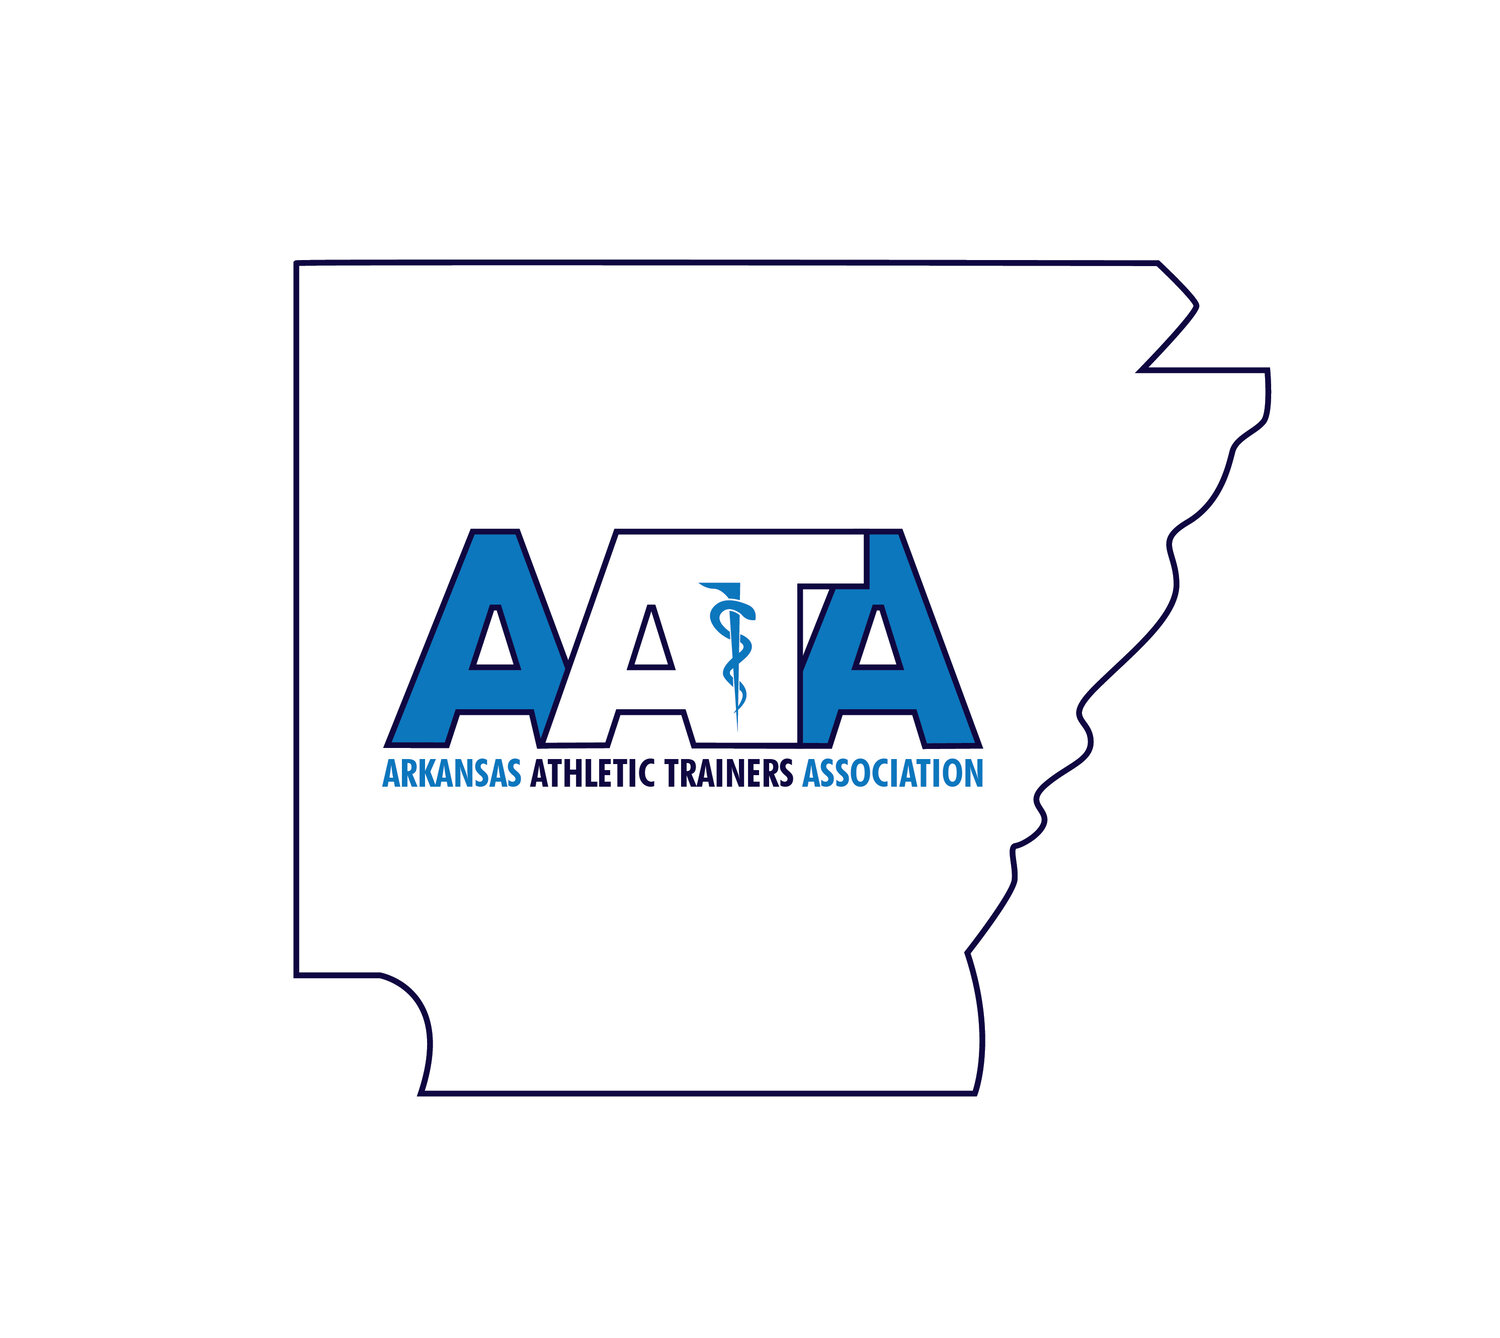 Arkansas Athletic Trainers Association